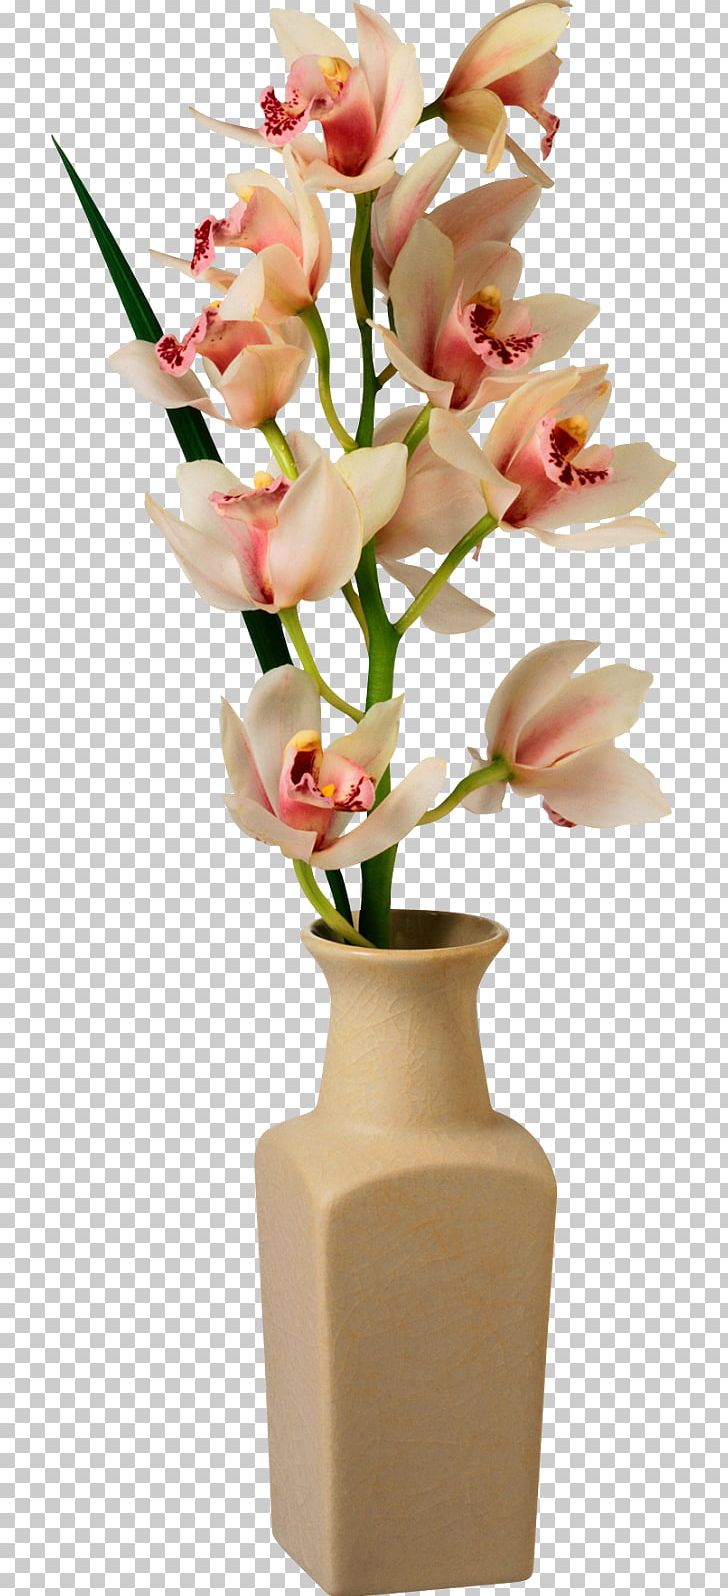 Vase Flower PNG, Clipart, Artificial Flower, Clip Art, Cut Flowers, Encapsulated Postscript, Floral Design Free PNG Download